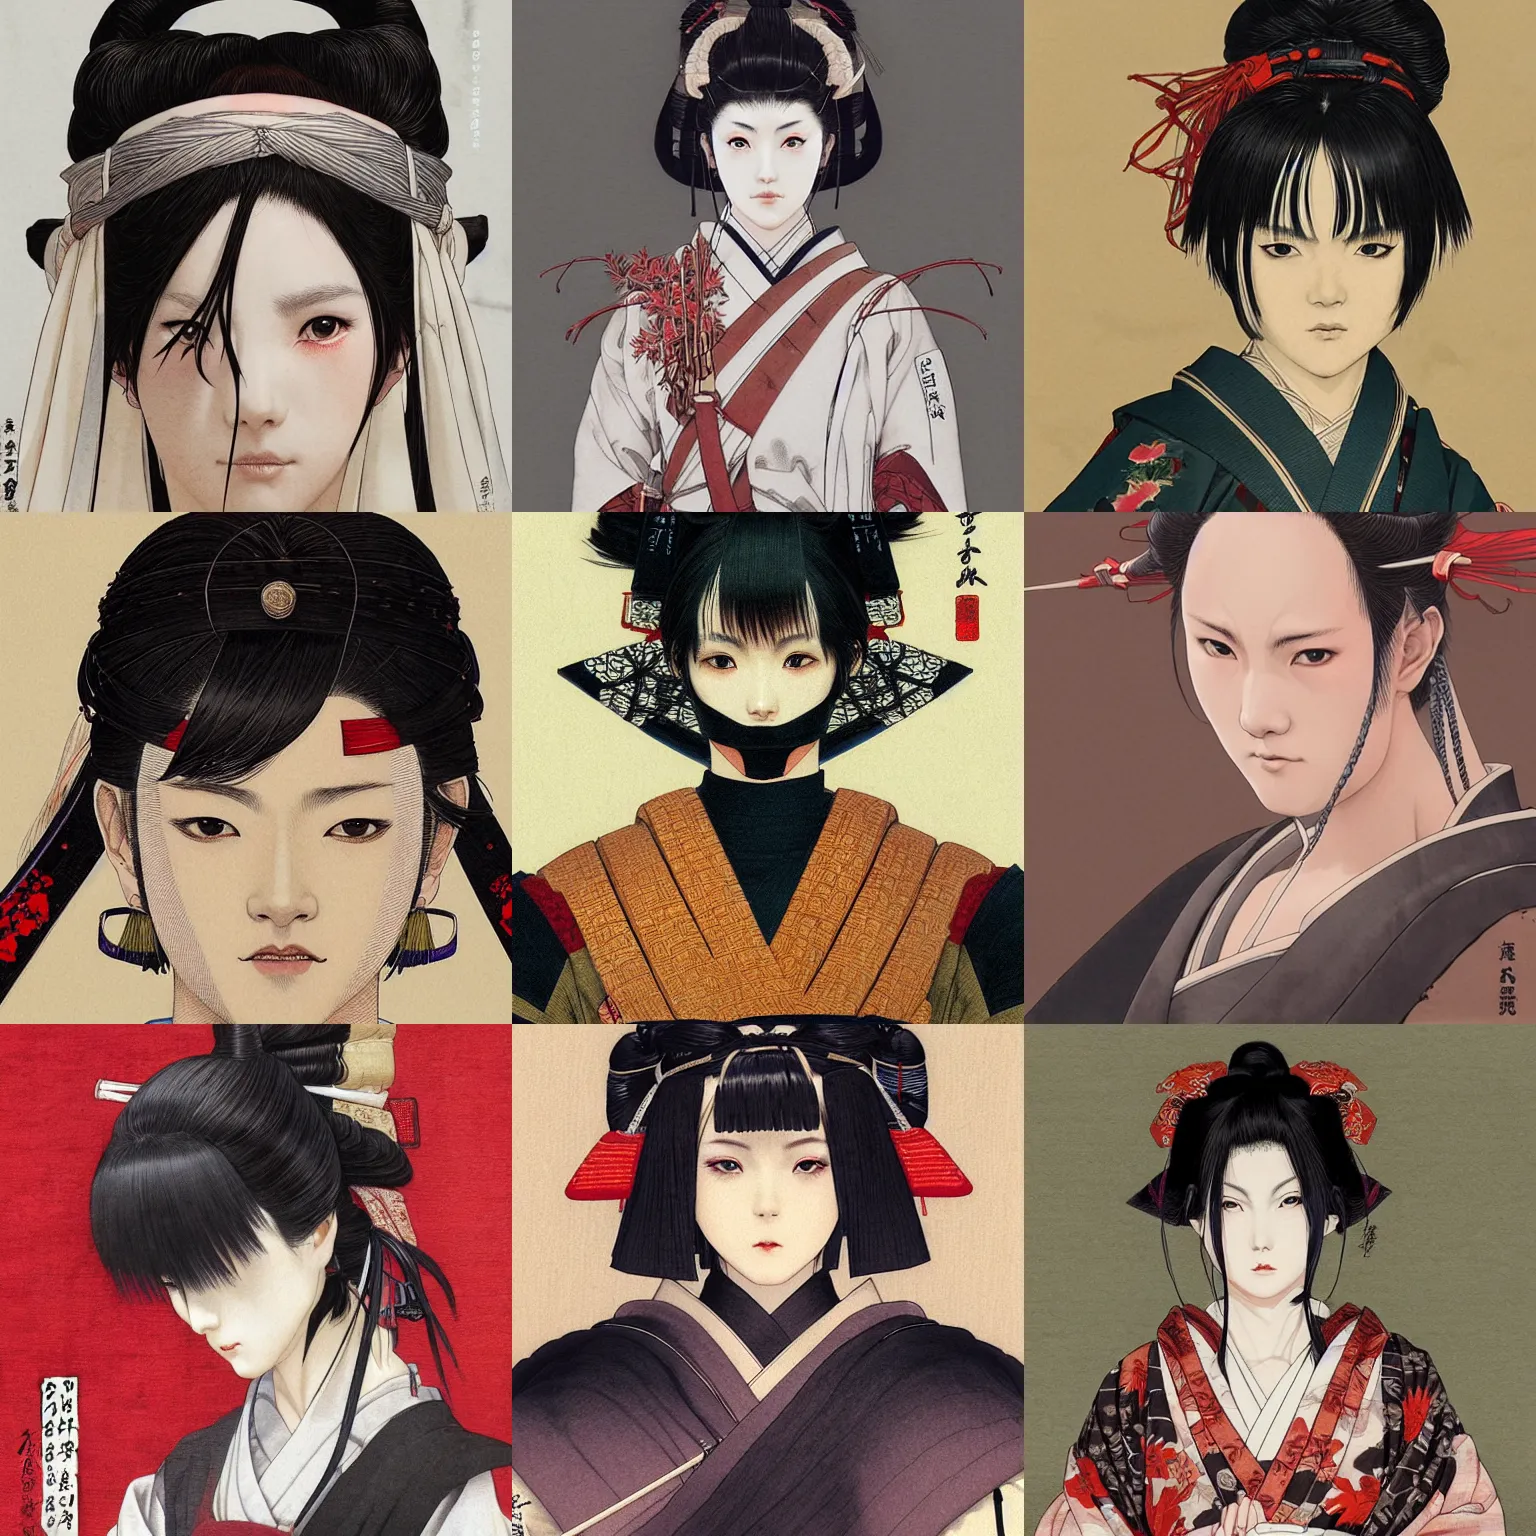 Prompt: hakama female warrior and taisho roman by takato yamamoto, symmetrical close up portrait, concept art, by wlop, artgerm, krenz cushart, greg rutkowski, pixiv